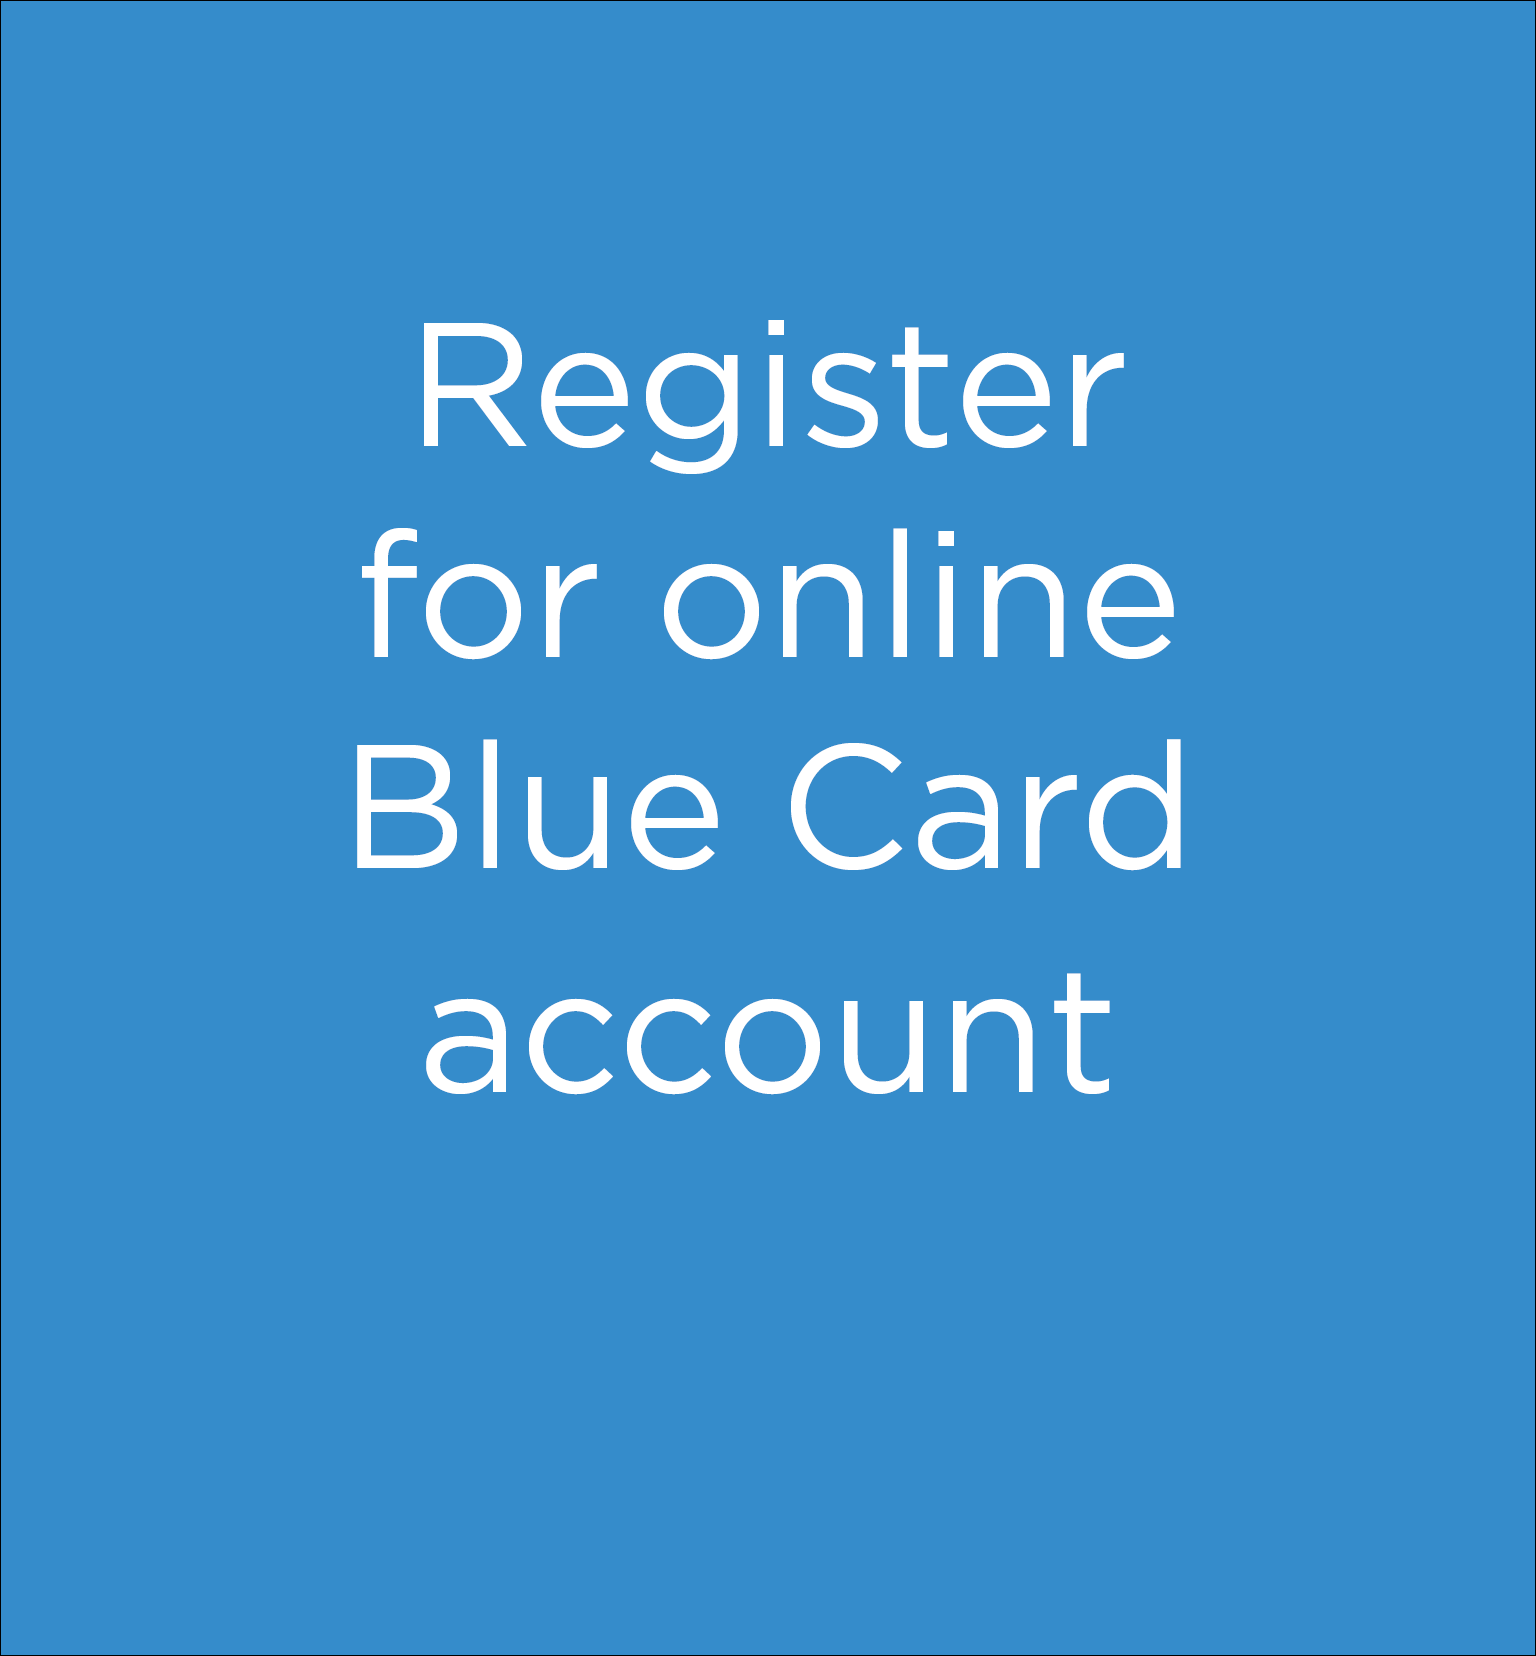 Register for online Blue Card account